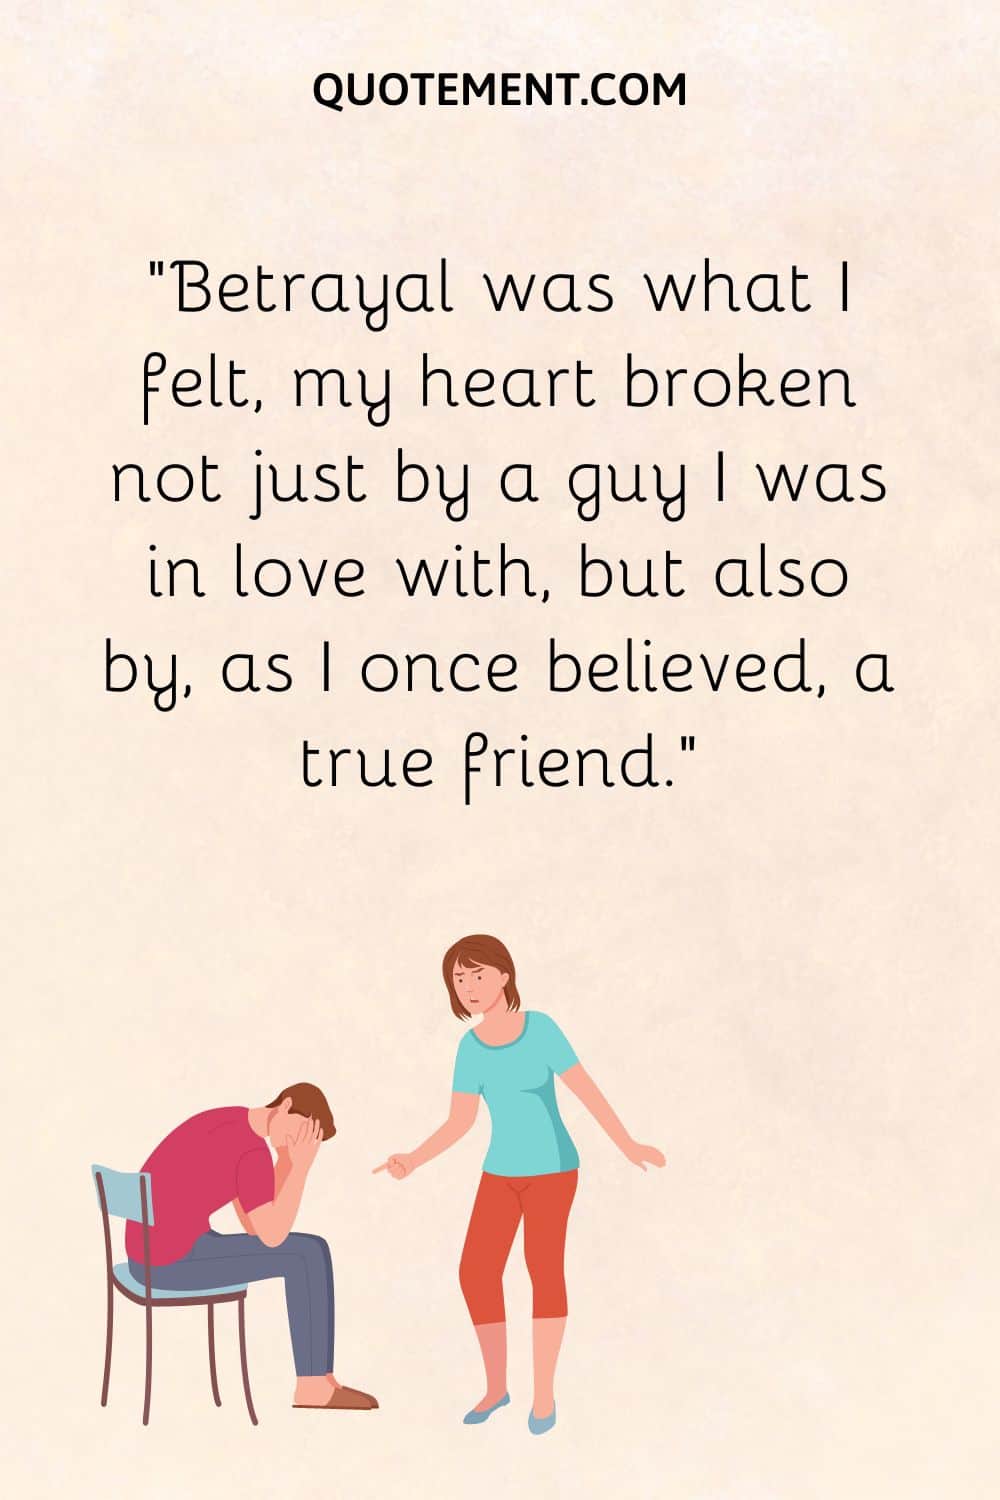 Betrayal was what I felt, my heart broken not just by a guy I was in love with, but also by, as I once believed, a true friend